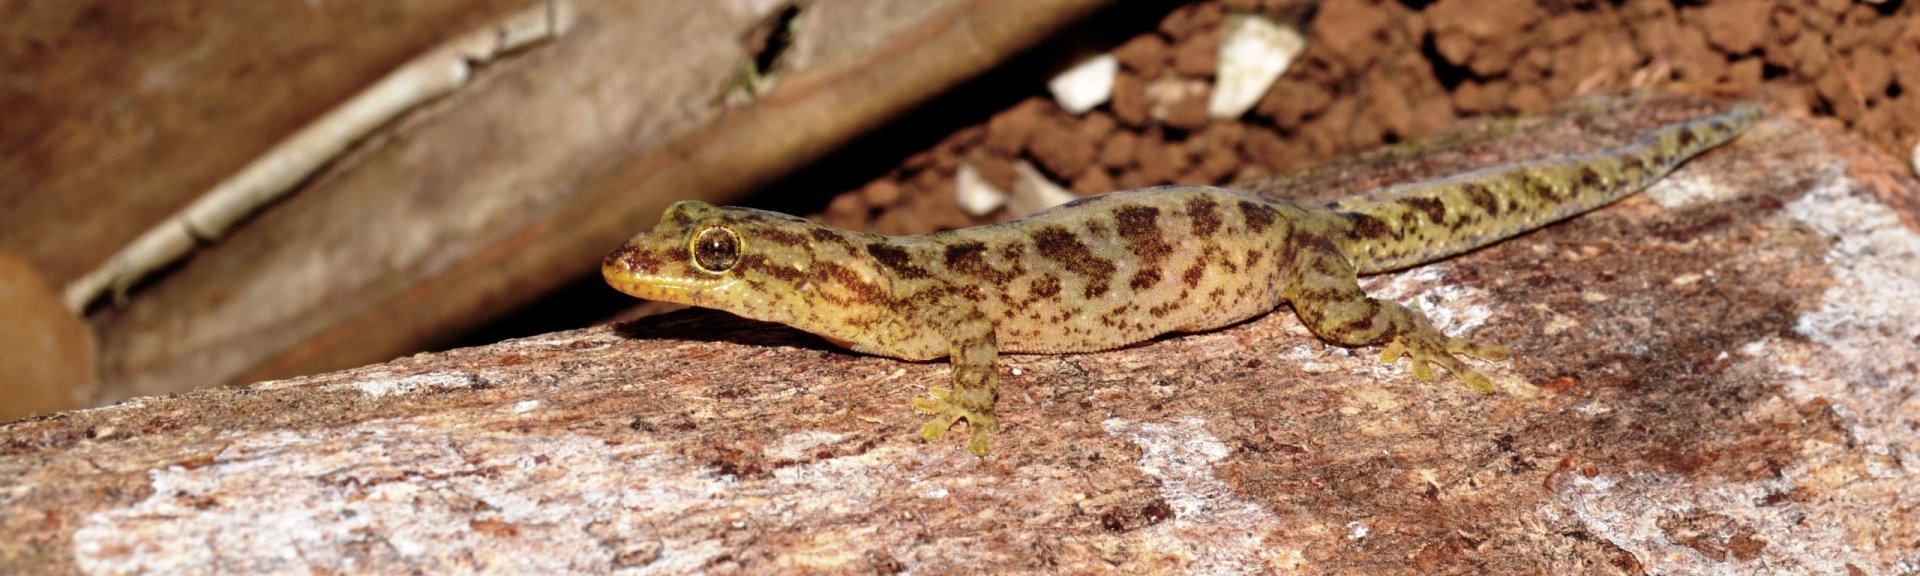 Lister’s gecko